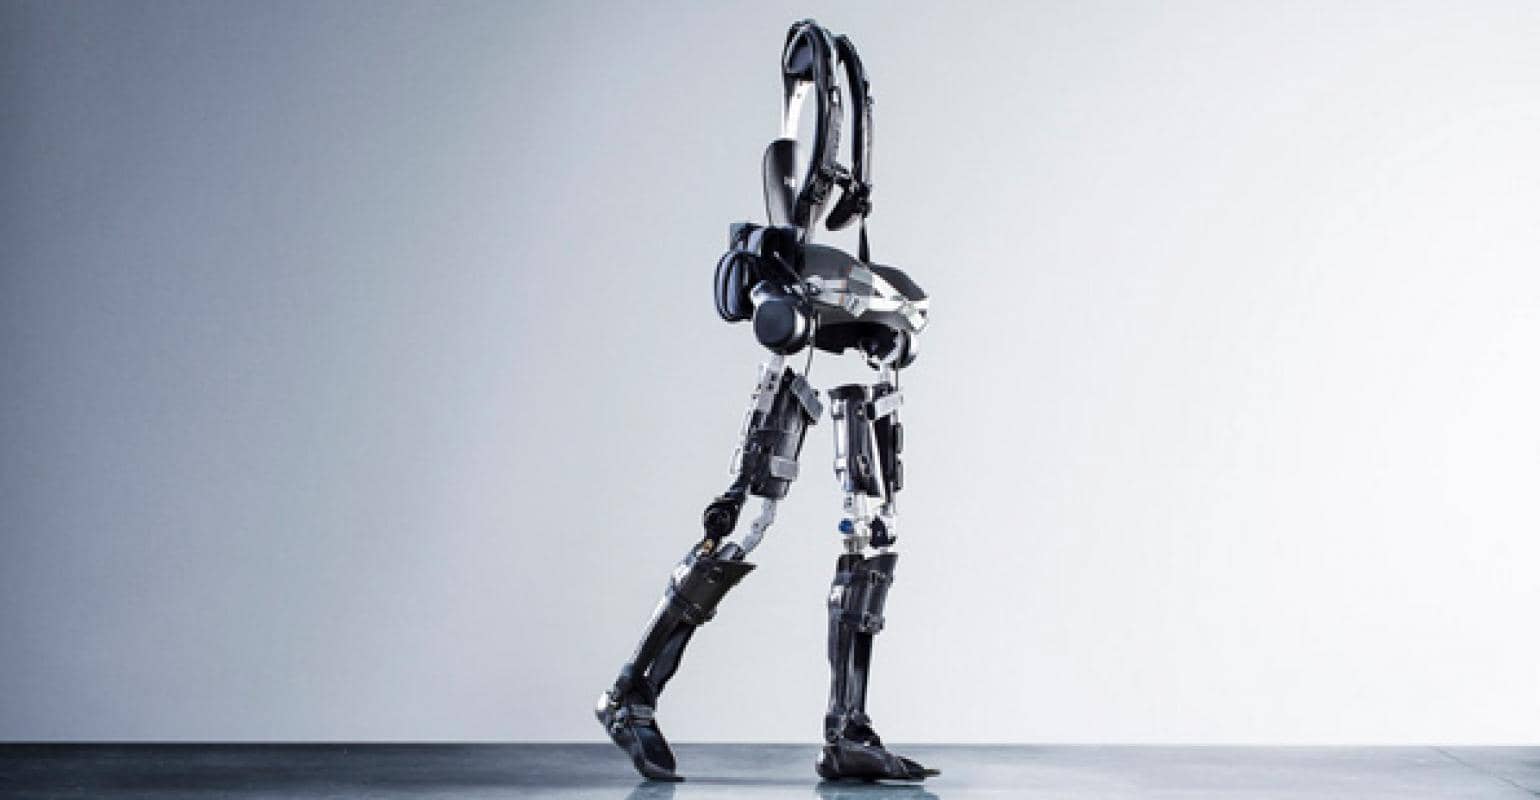 exoskeleton affects human decision making ability